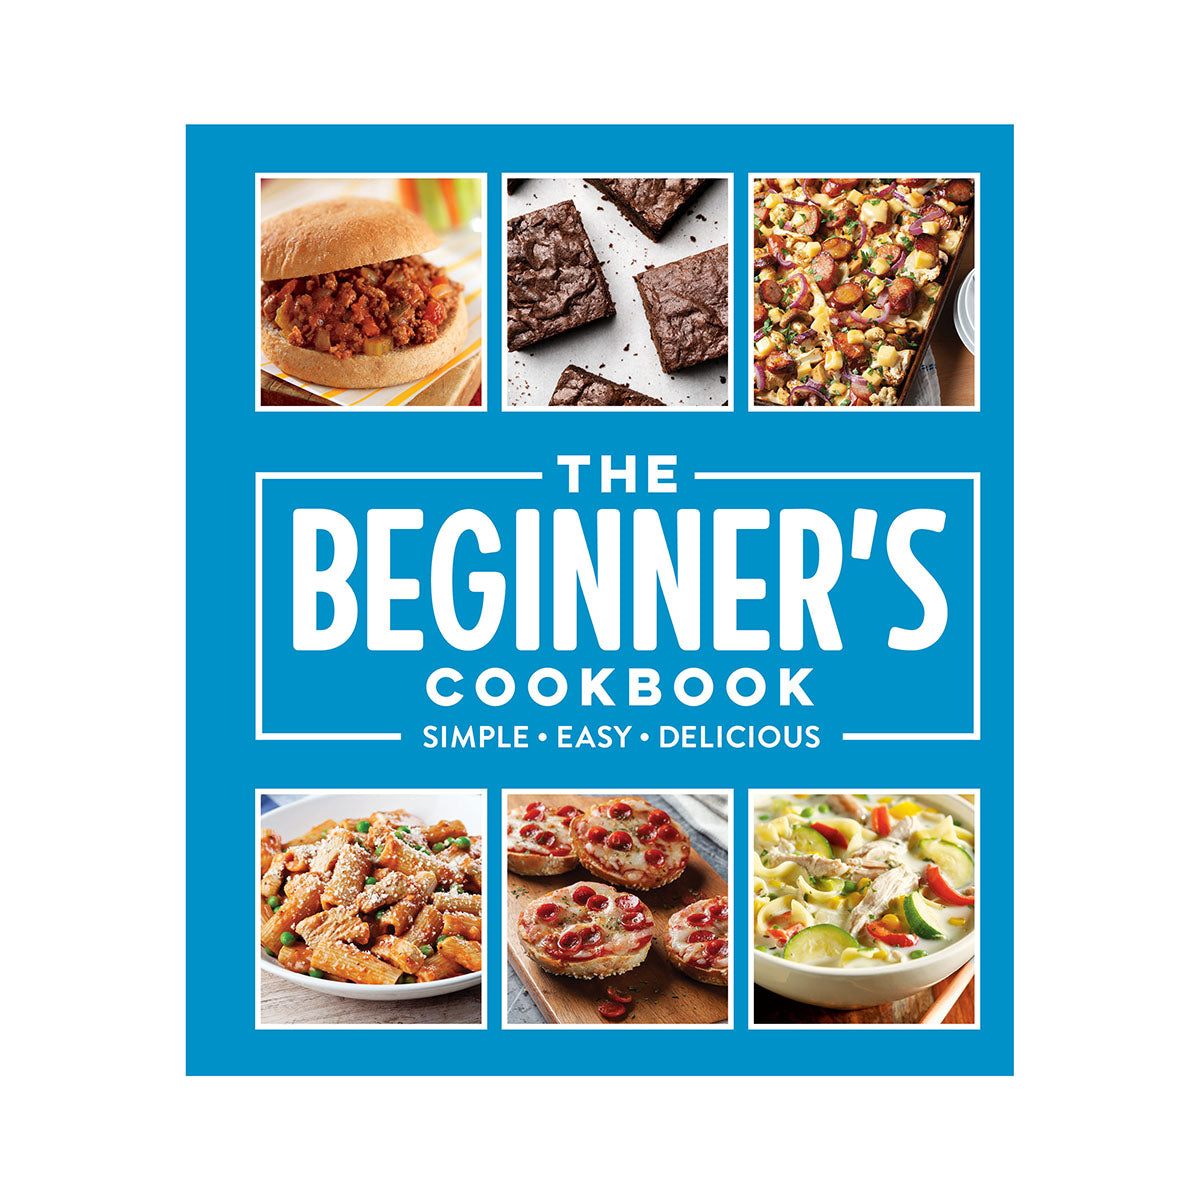 The Beginner's Cookbook